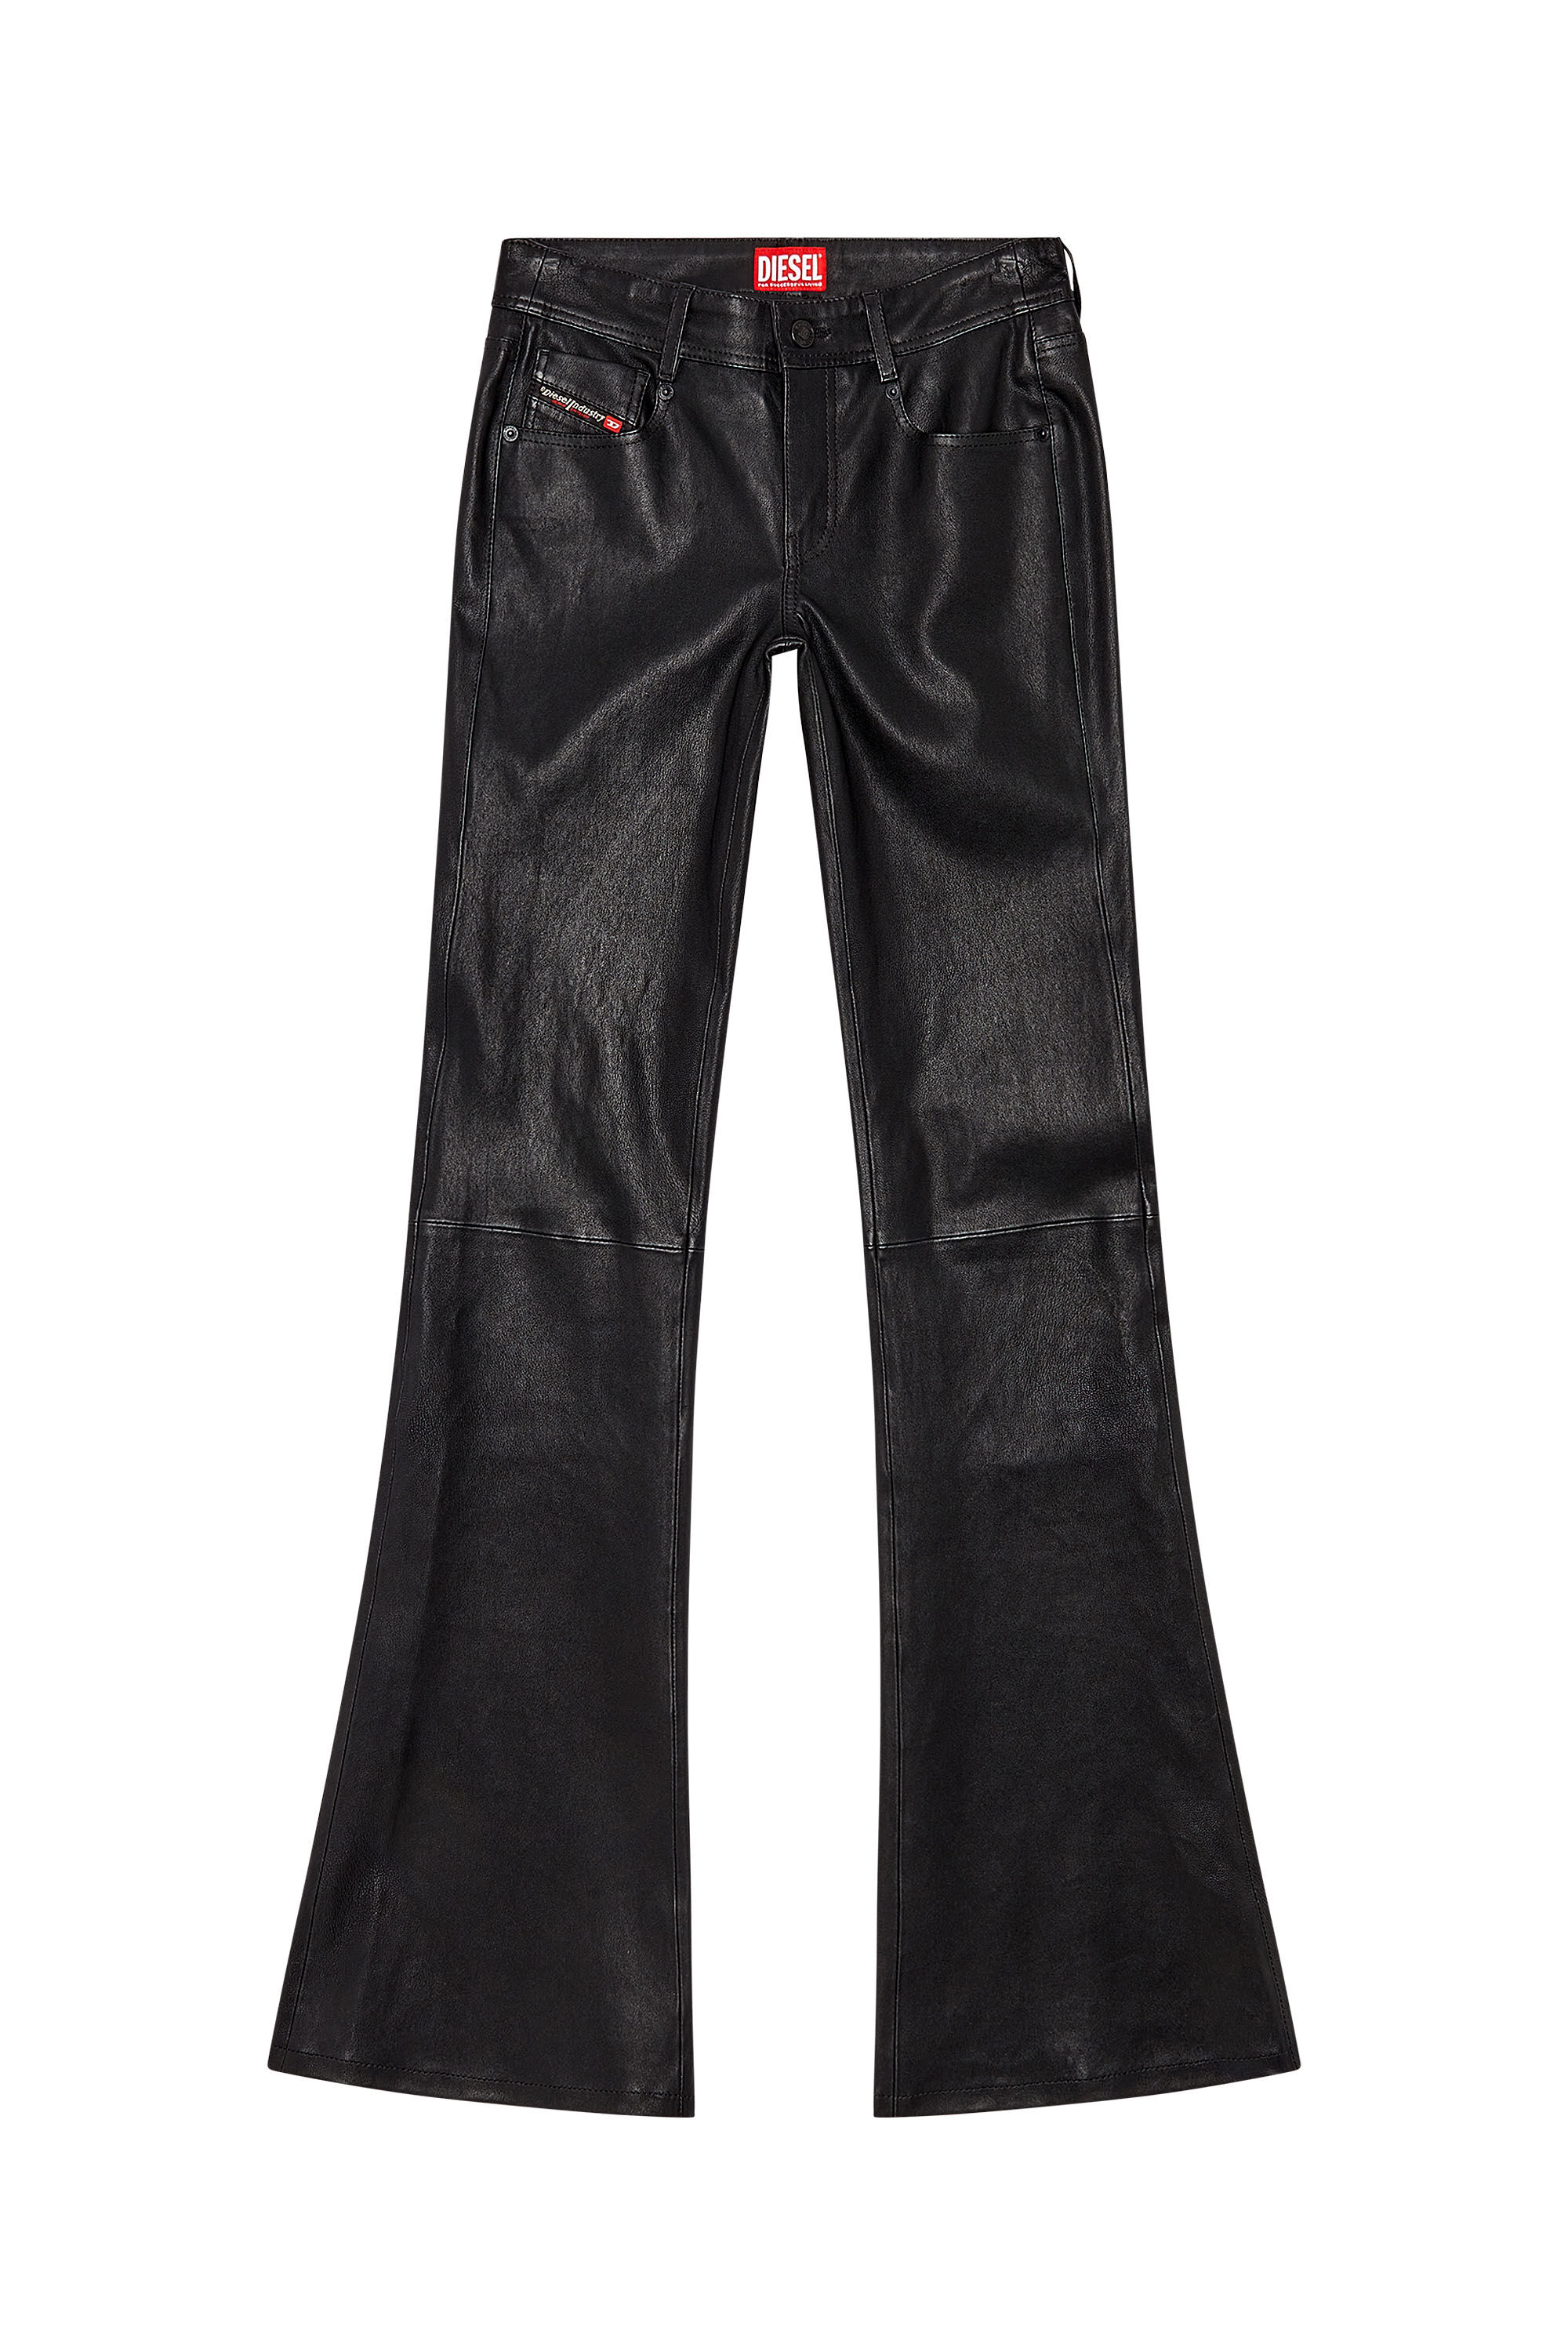 Diesel - L-STELLAR, Woman Bootcut pants in stretch leather in Black - Image 2